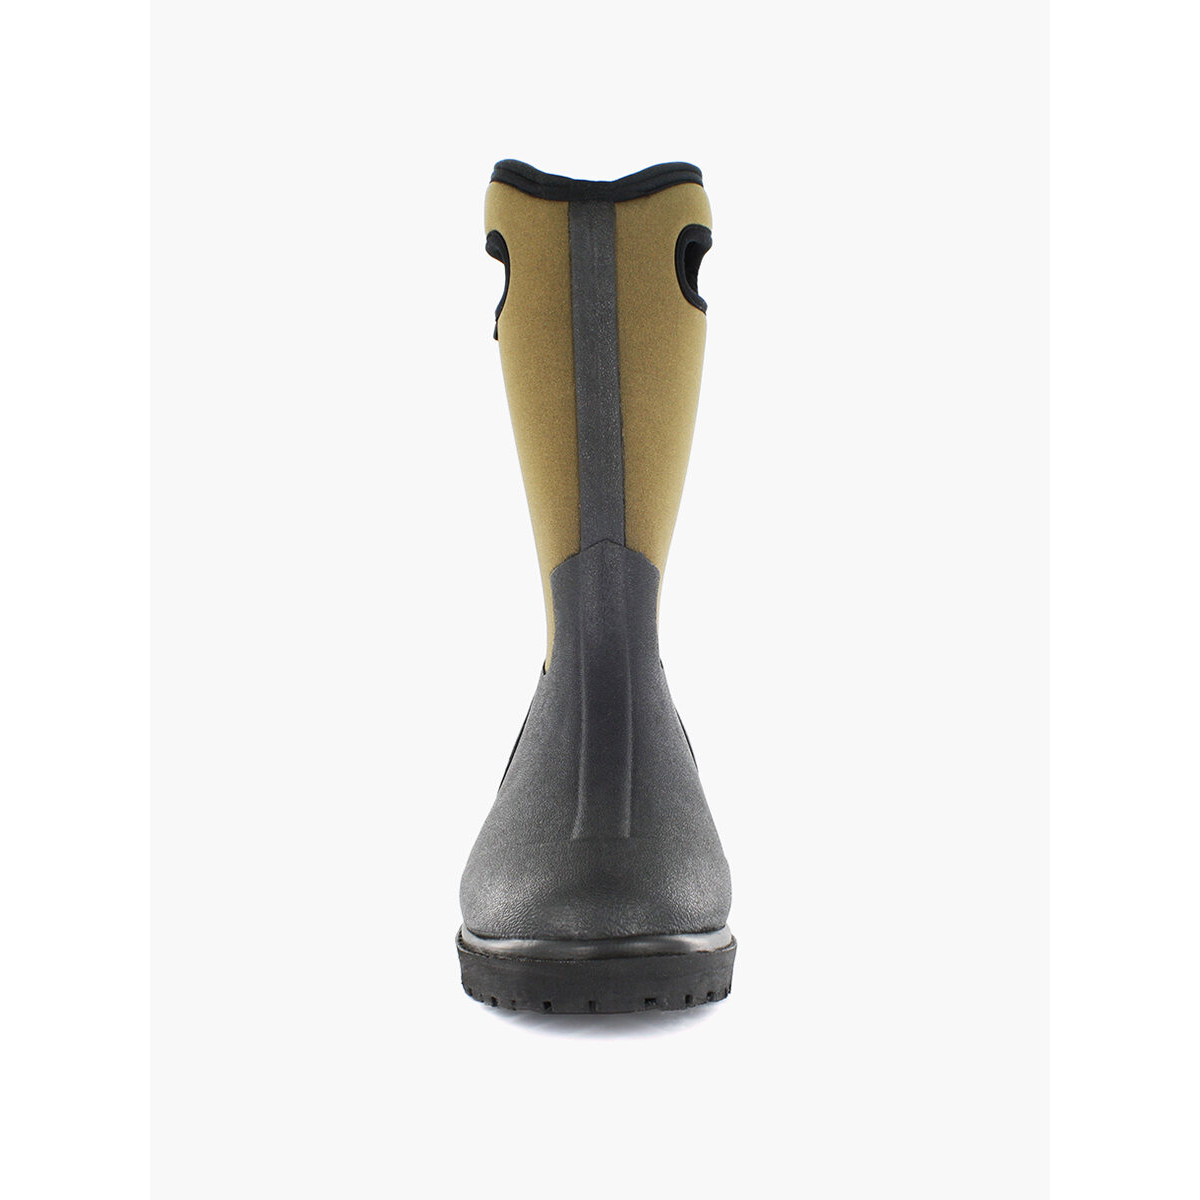 BOGS Men's Roper Insulated Waterproof Soft Toe Work Boots Black & Brown - 69162-963 - BLACK, 14